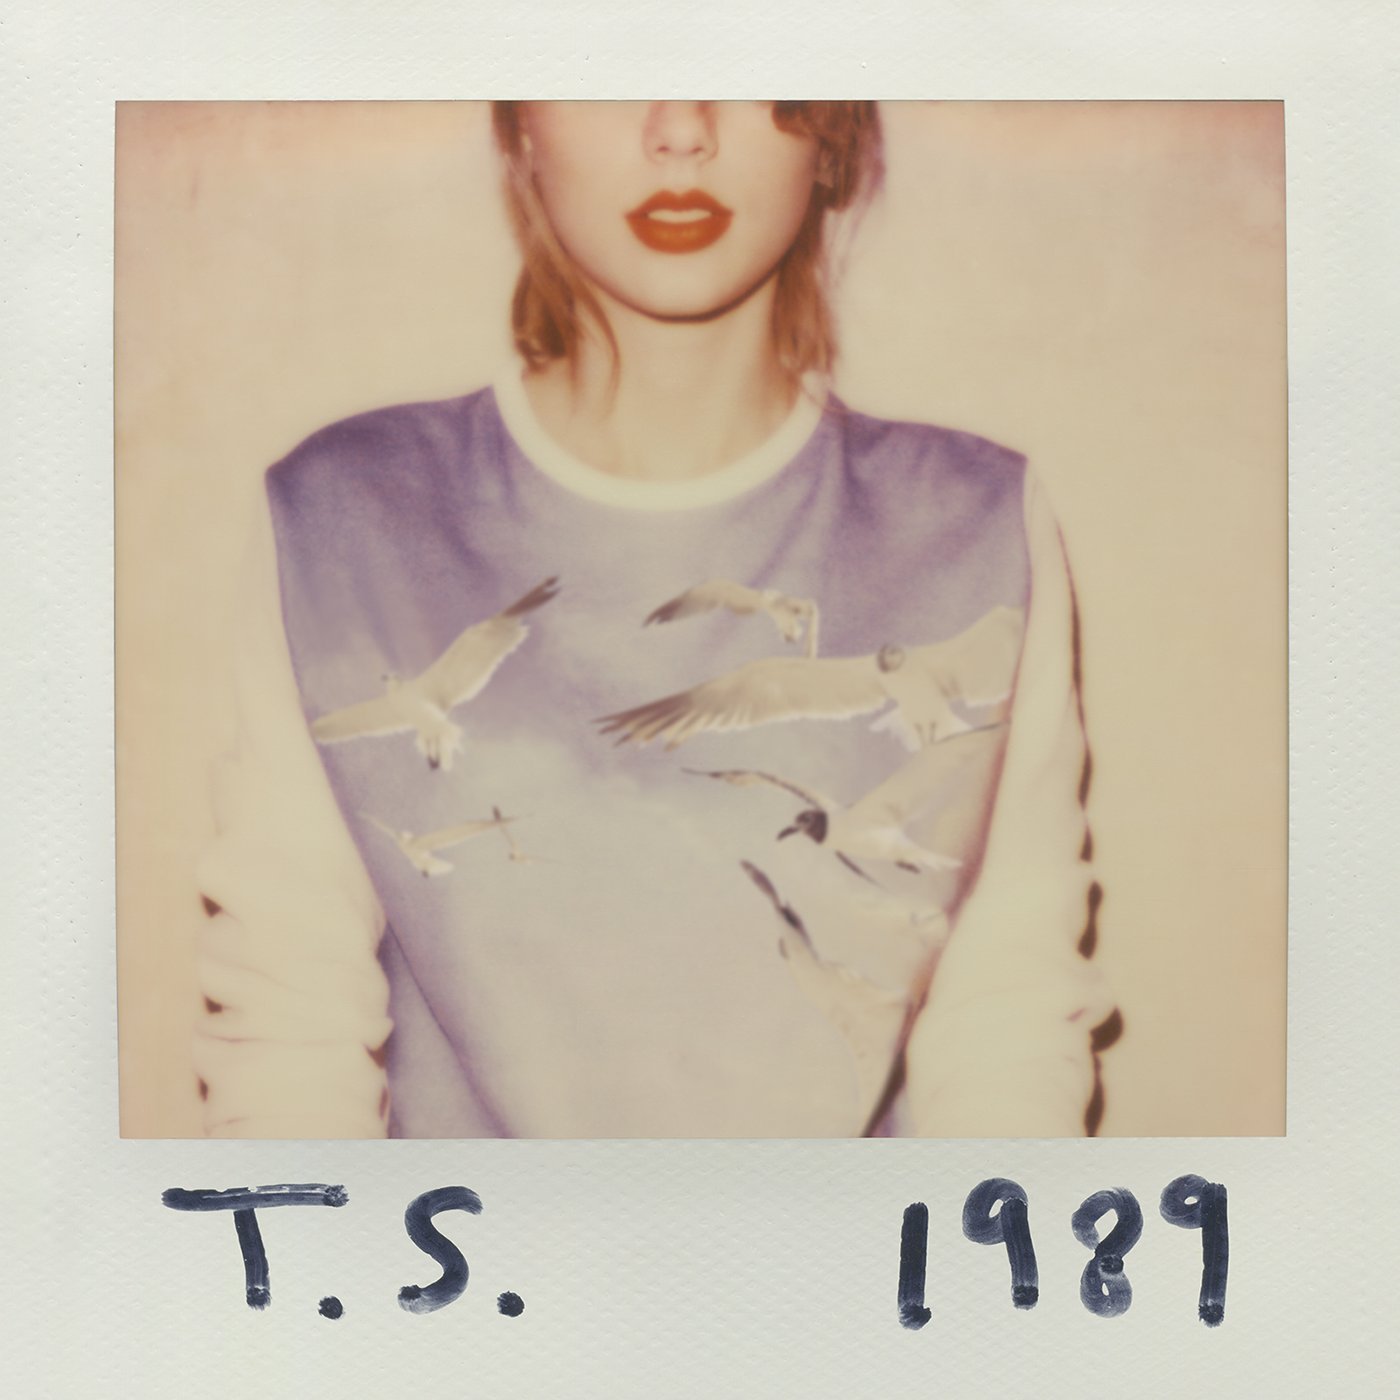 1989 - Taylor Swift album art